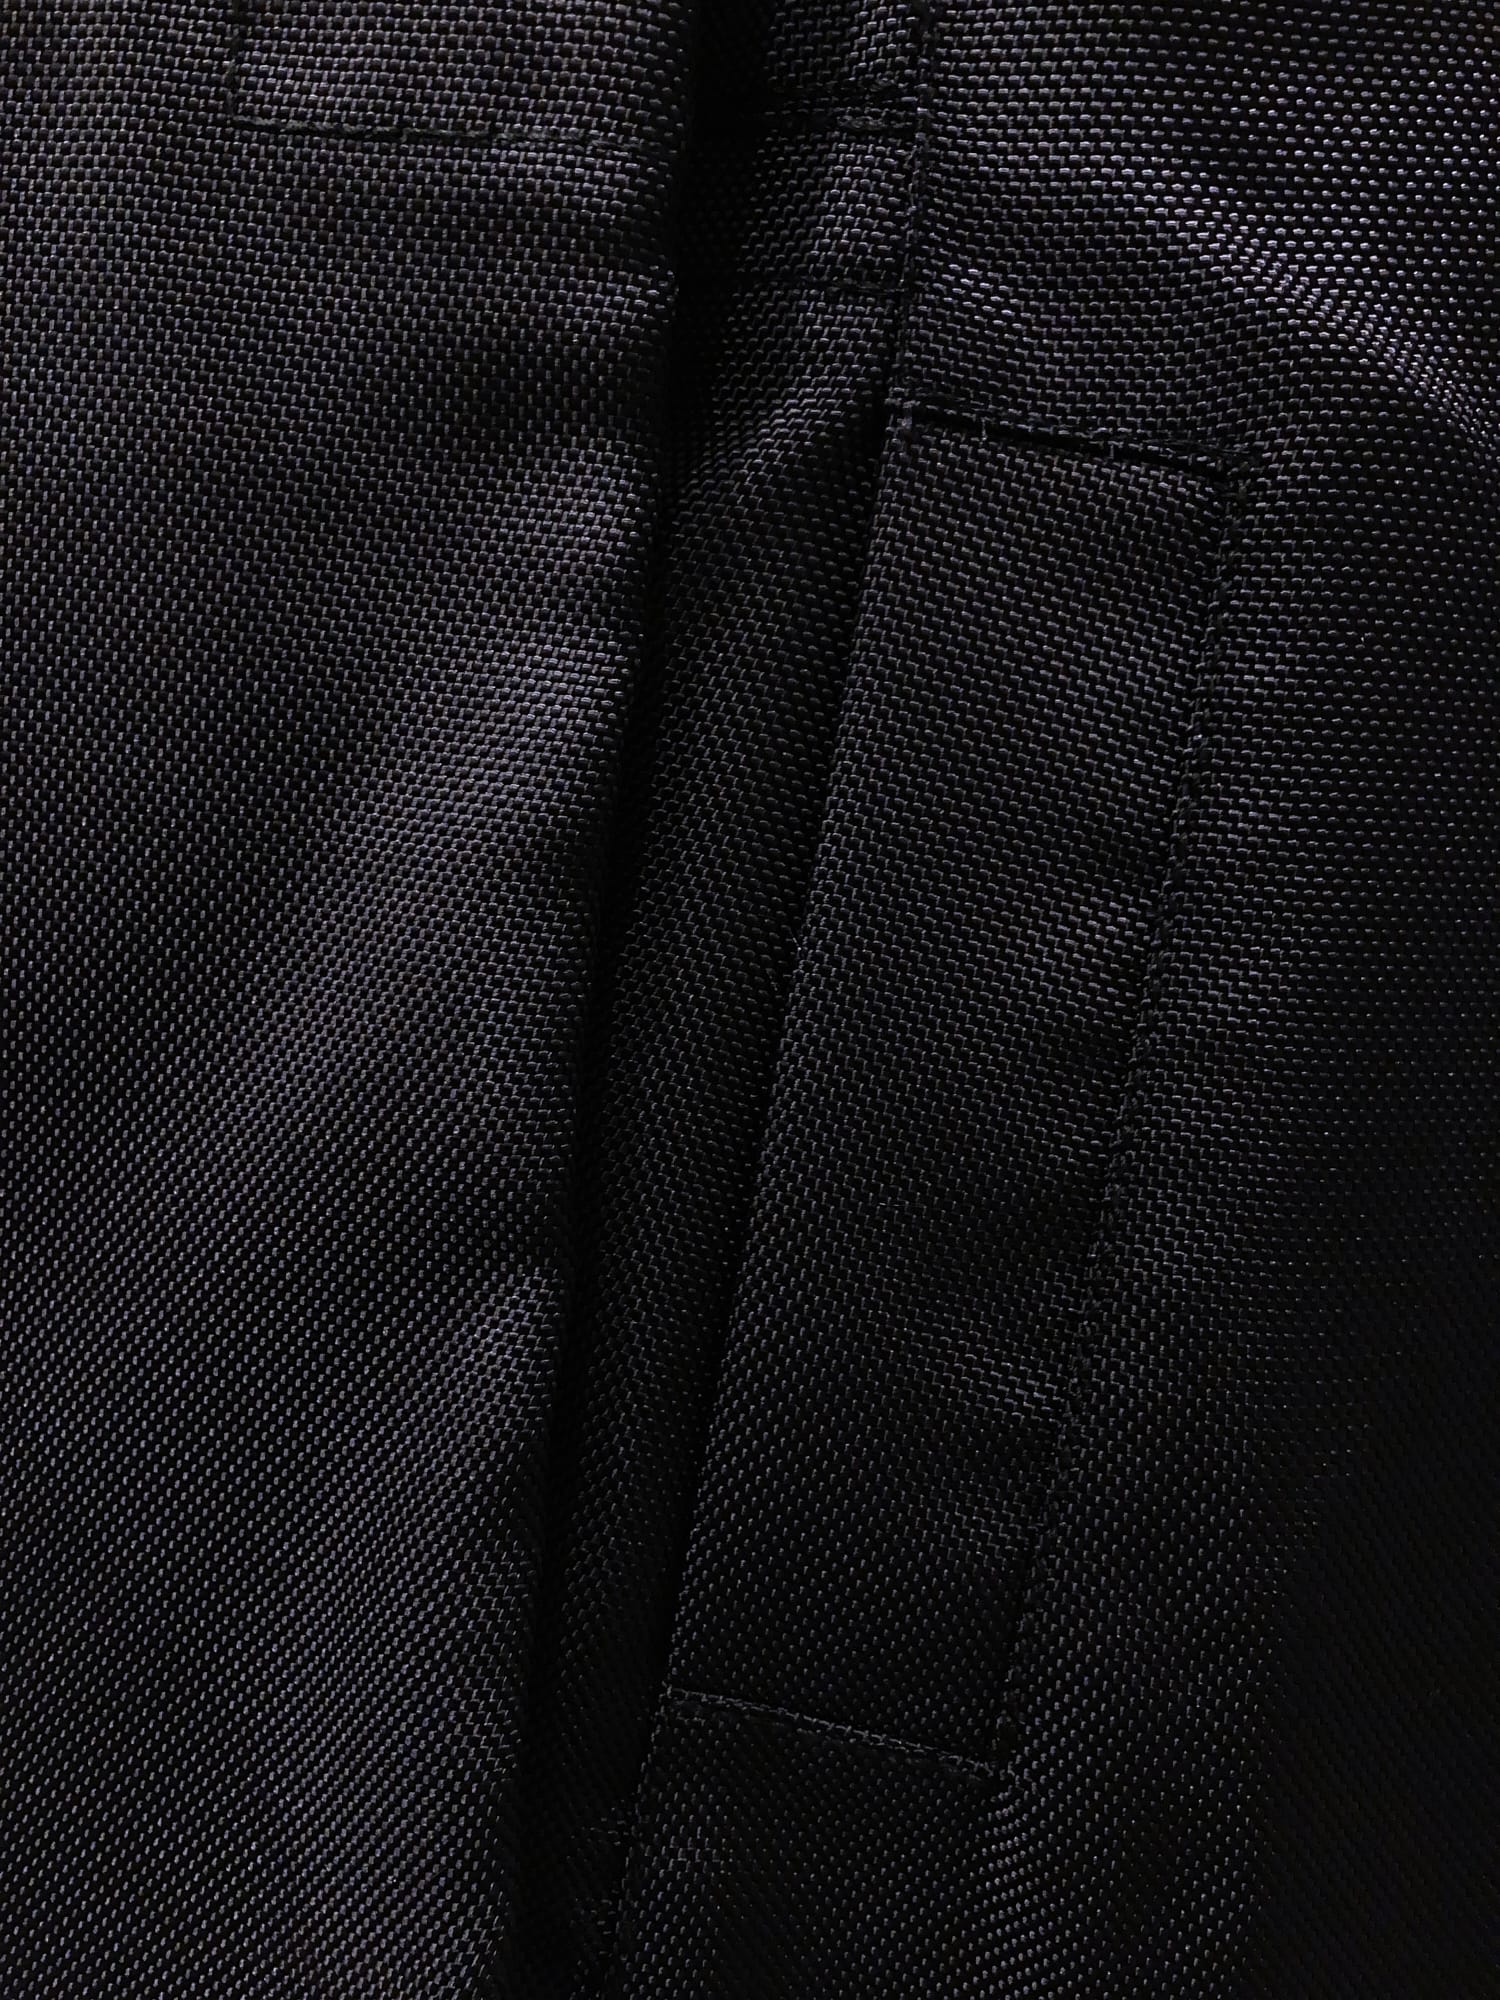 Dirk Bikkembergs Hommes Pour La Femme 1990s black ballistic nylon three button blazer